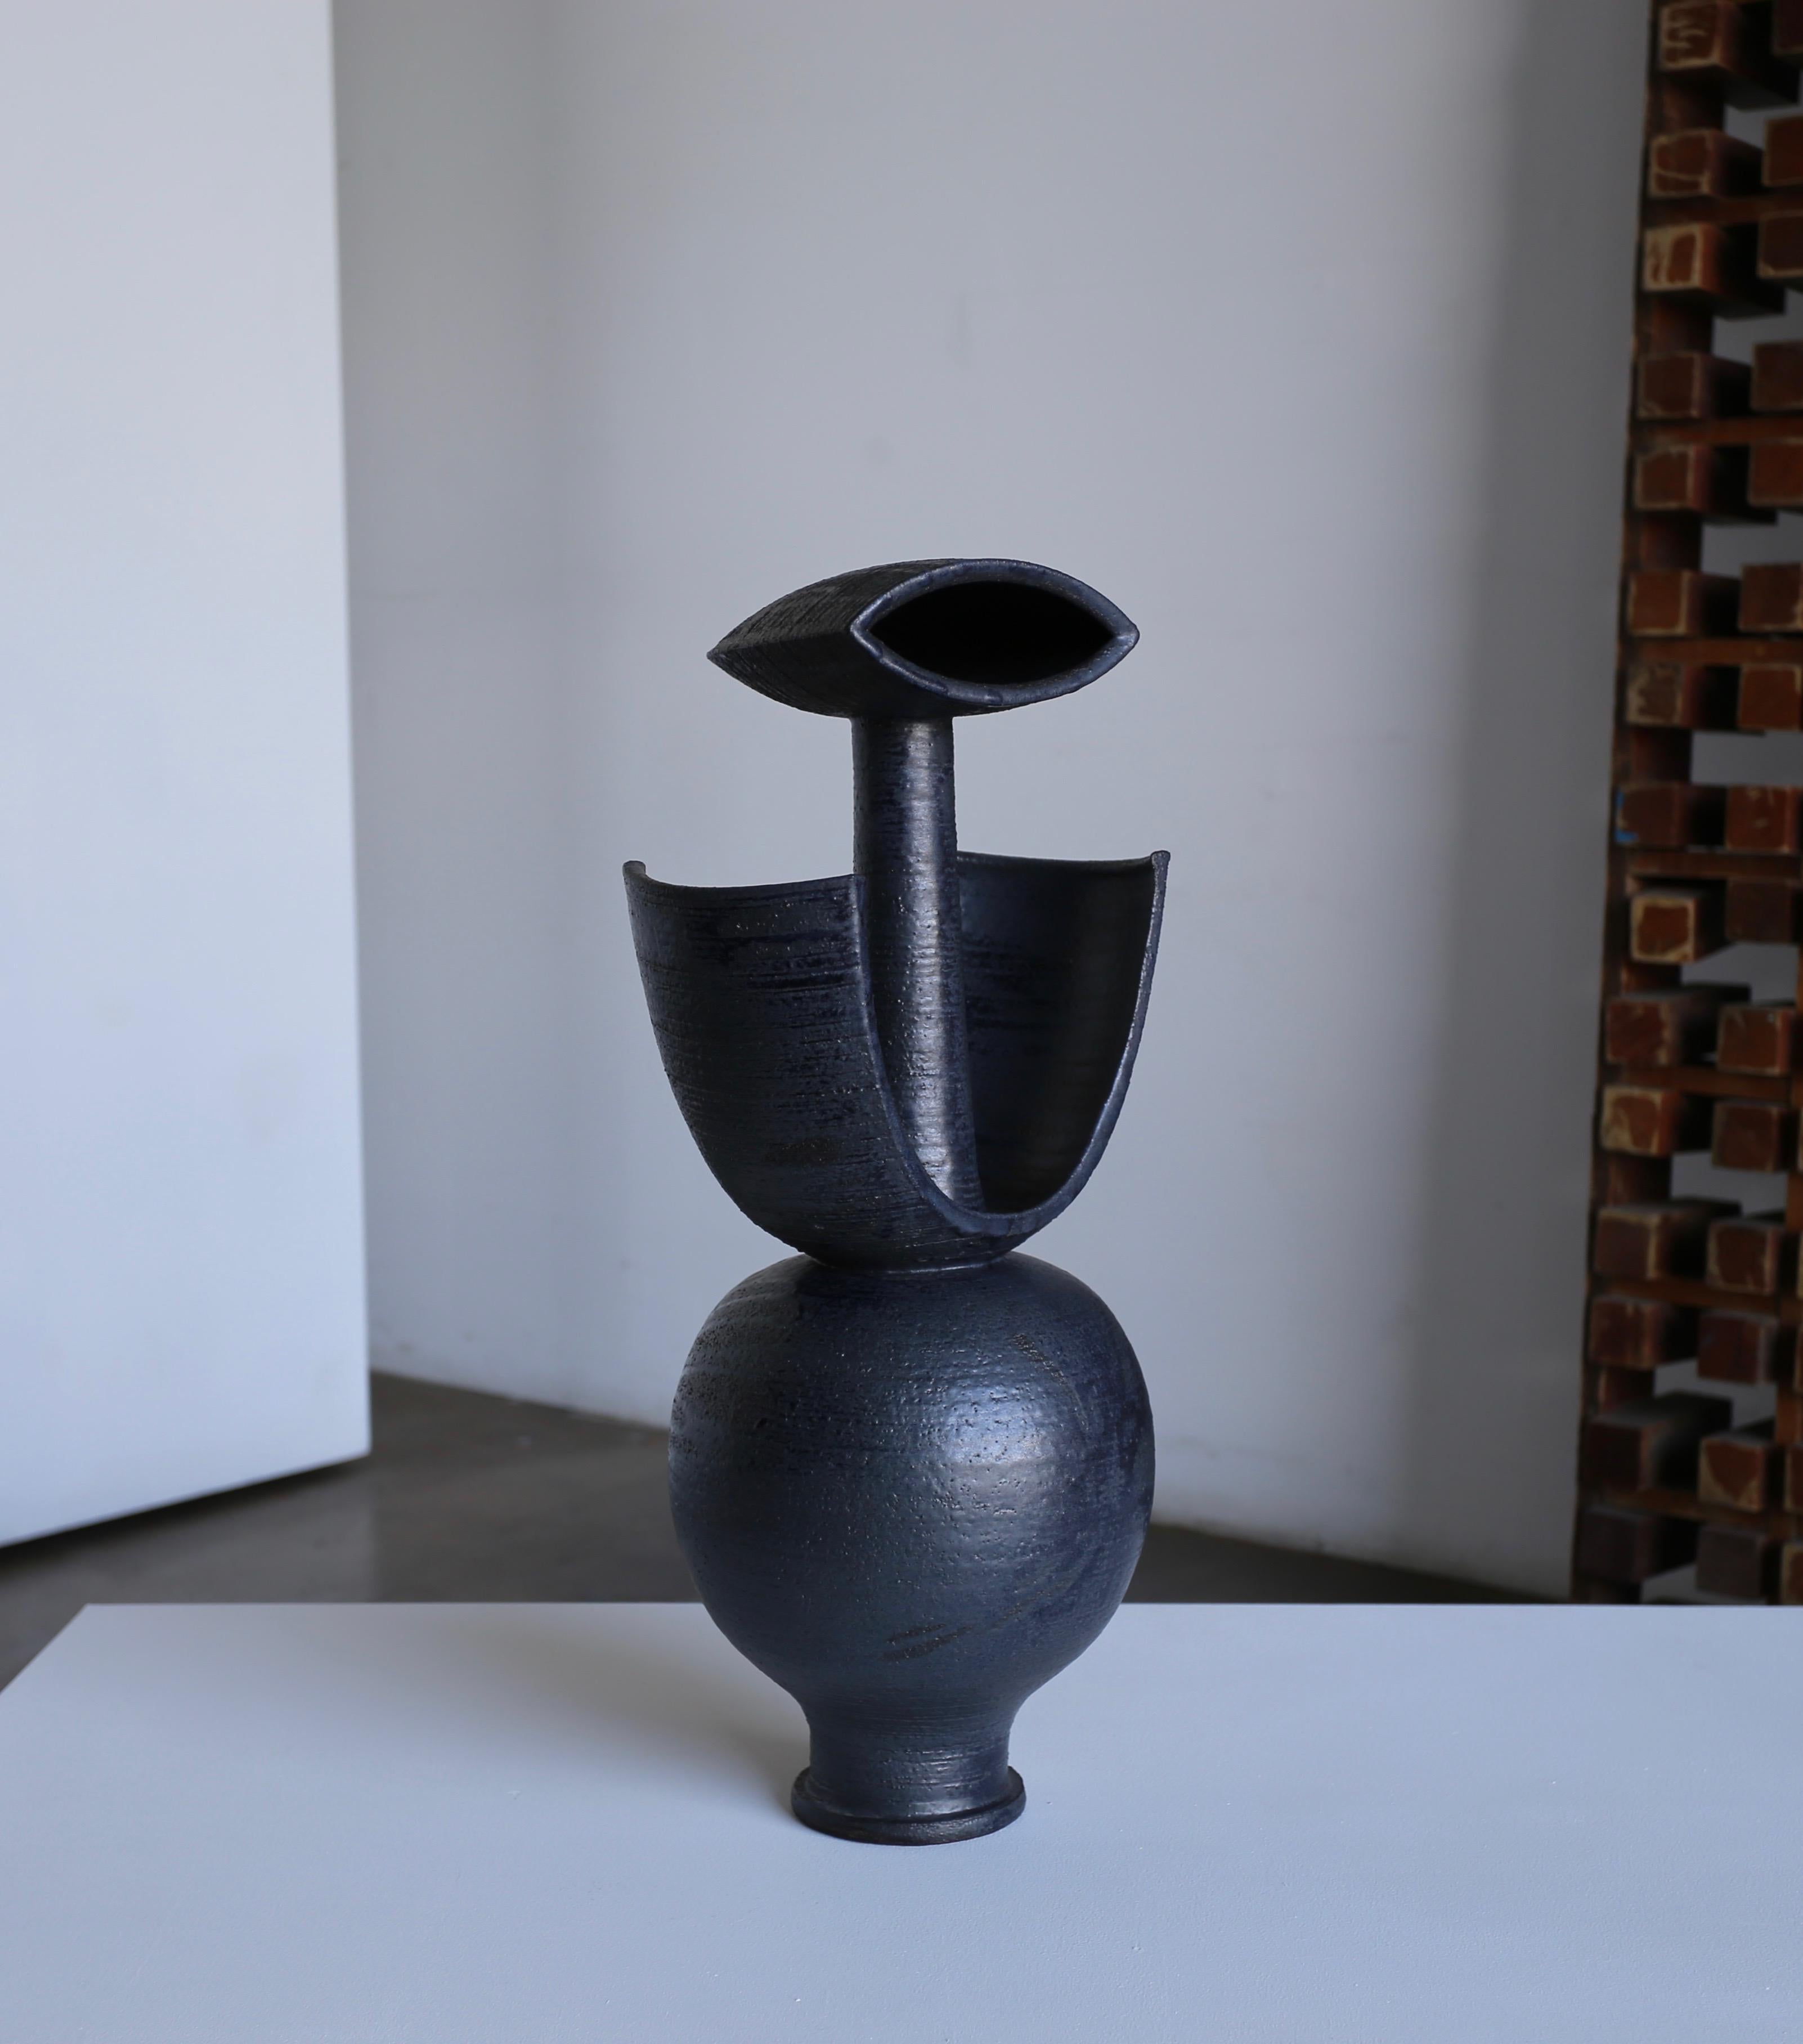 Tim Keenan ceramic sculpture, 2019.